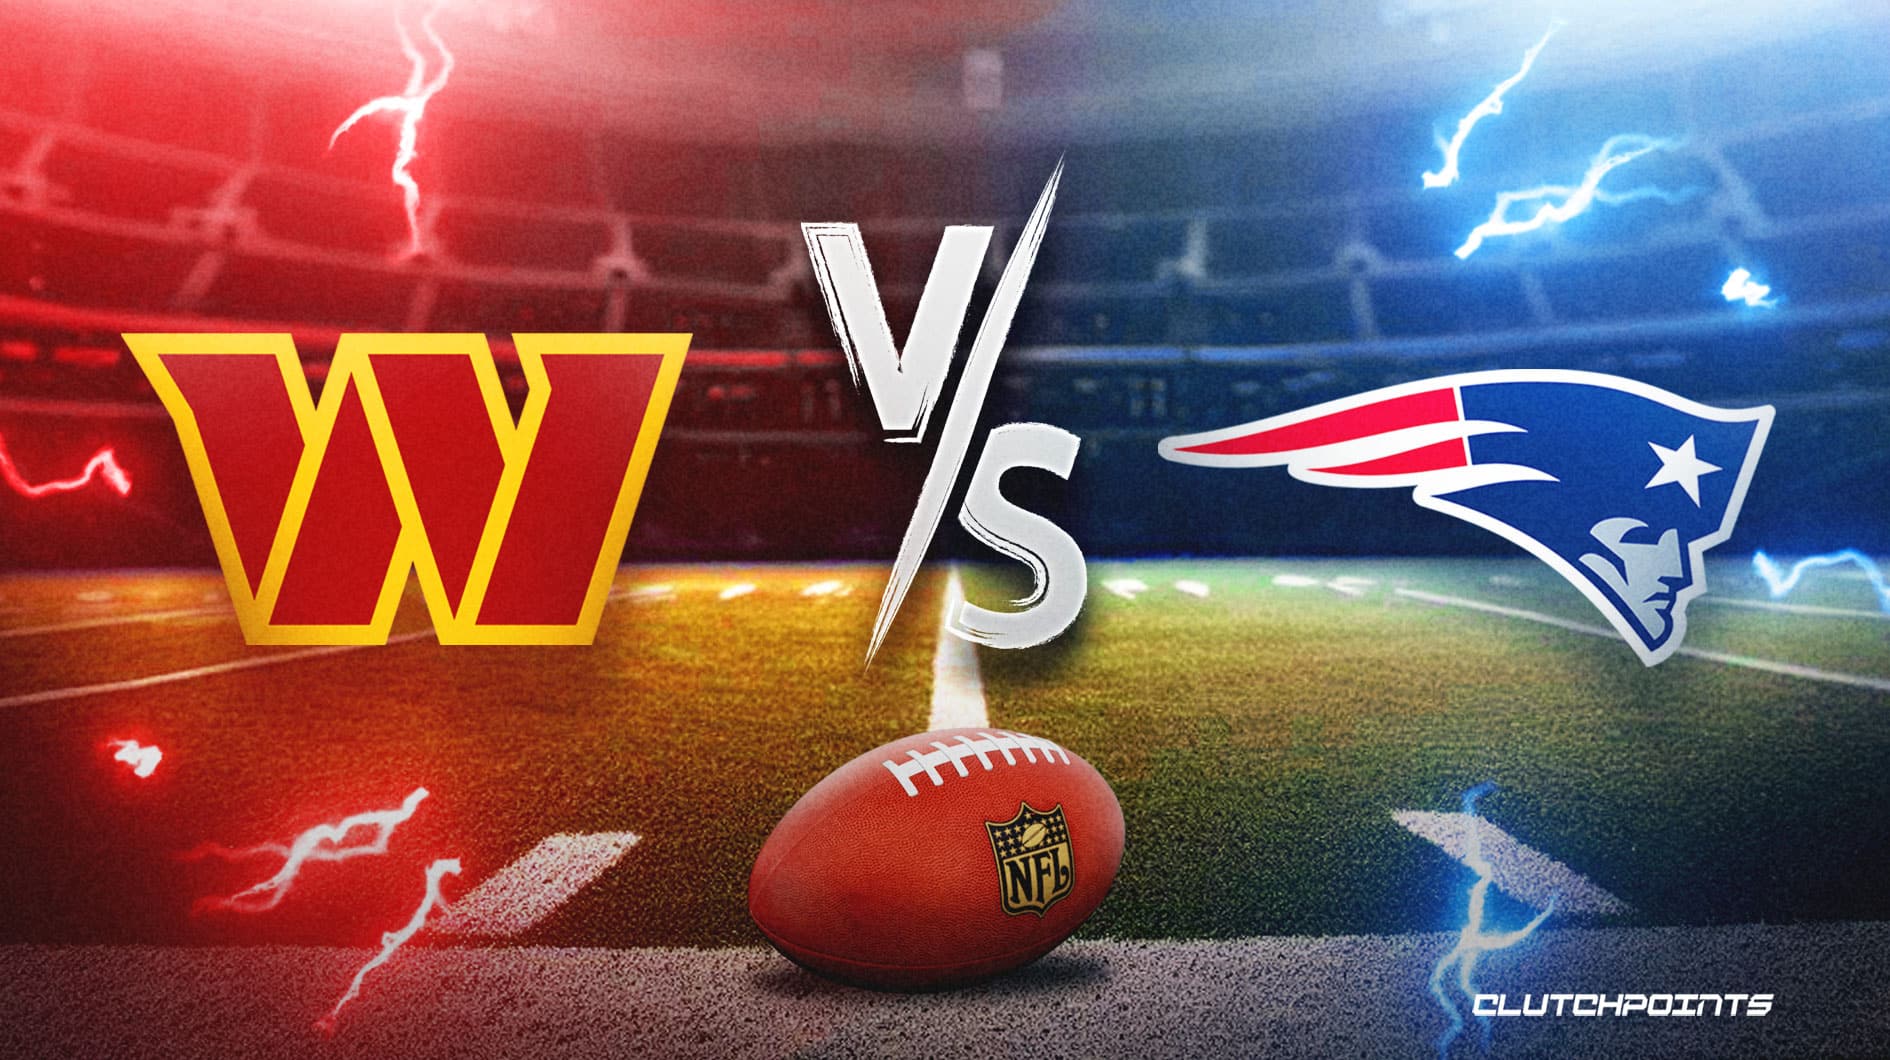 CommandersPatriots prediction, odds, pick, how to watch NFL Week 9 game